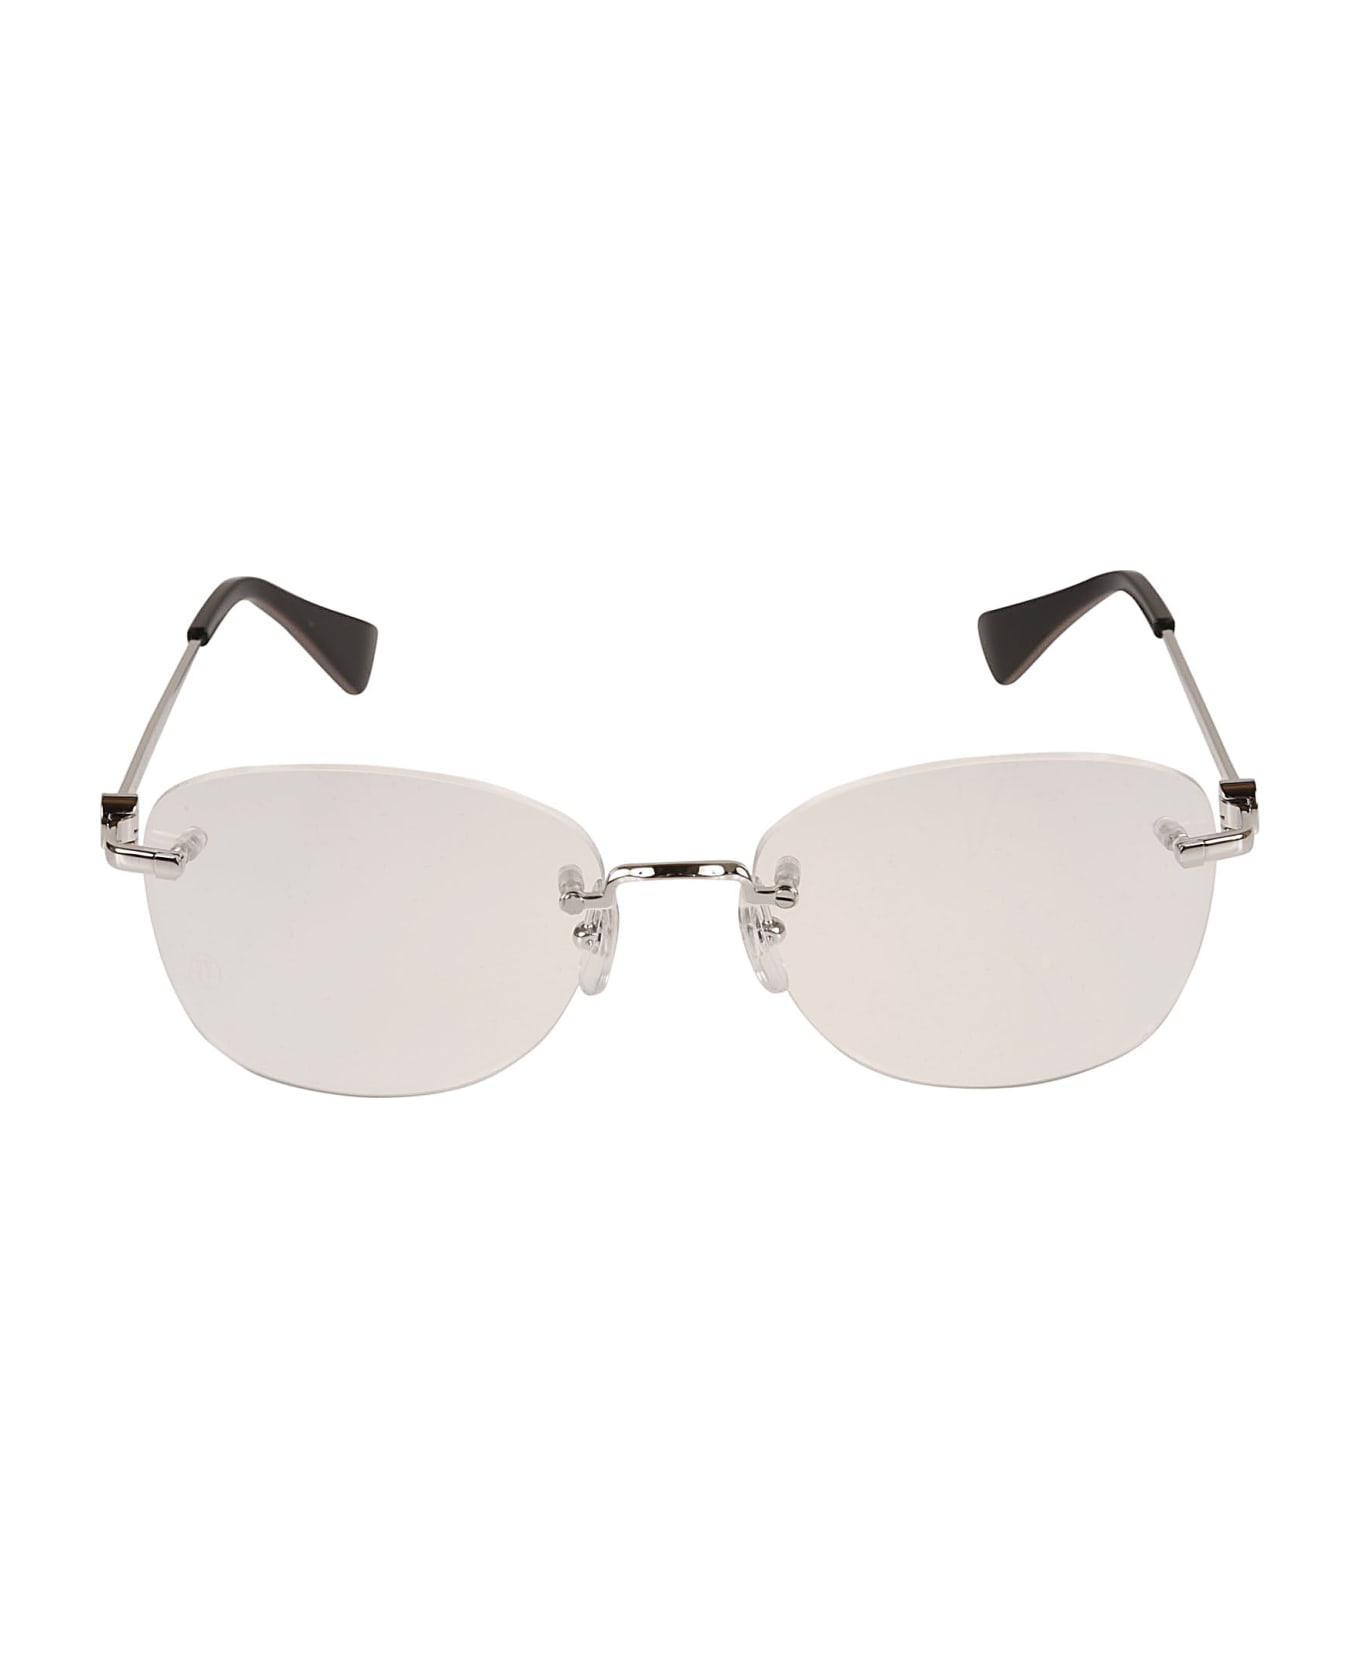 Cartier Eyewear Rimless Sunglasses - Silver サングラス